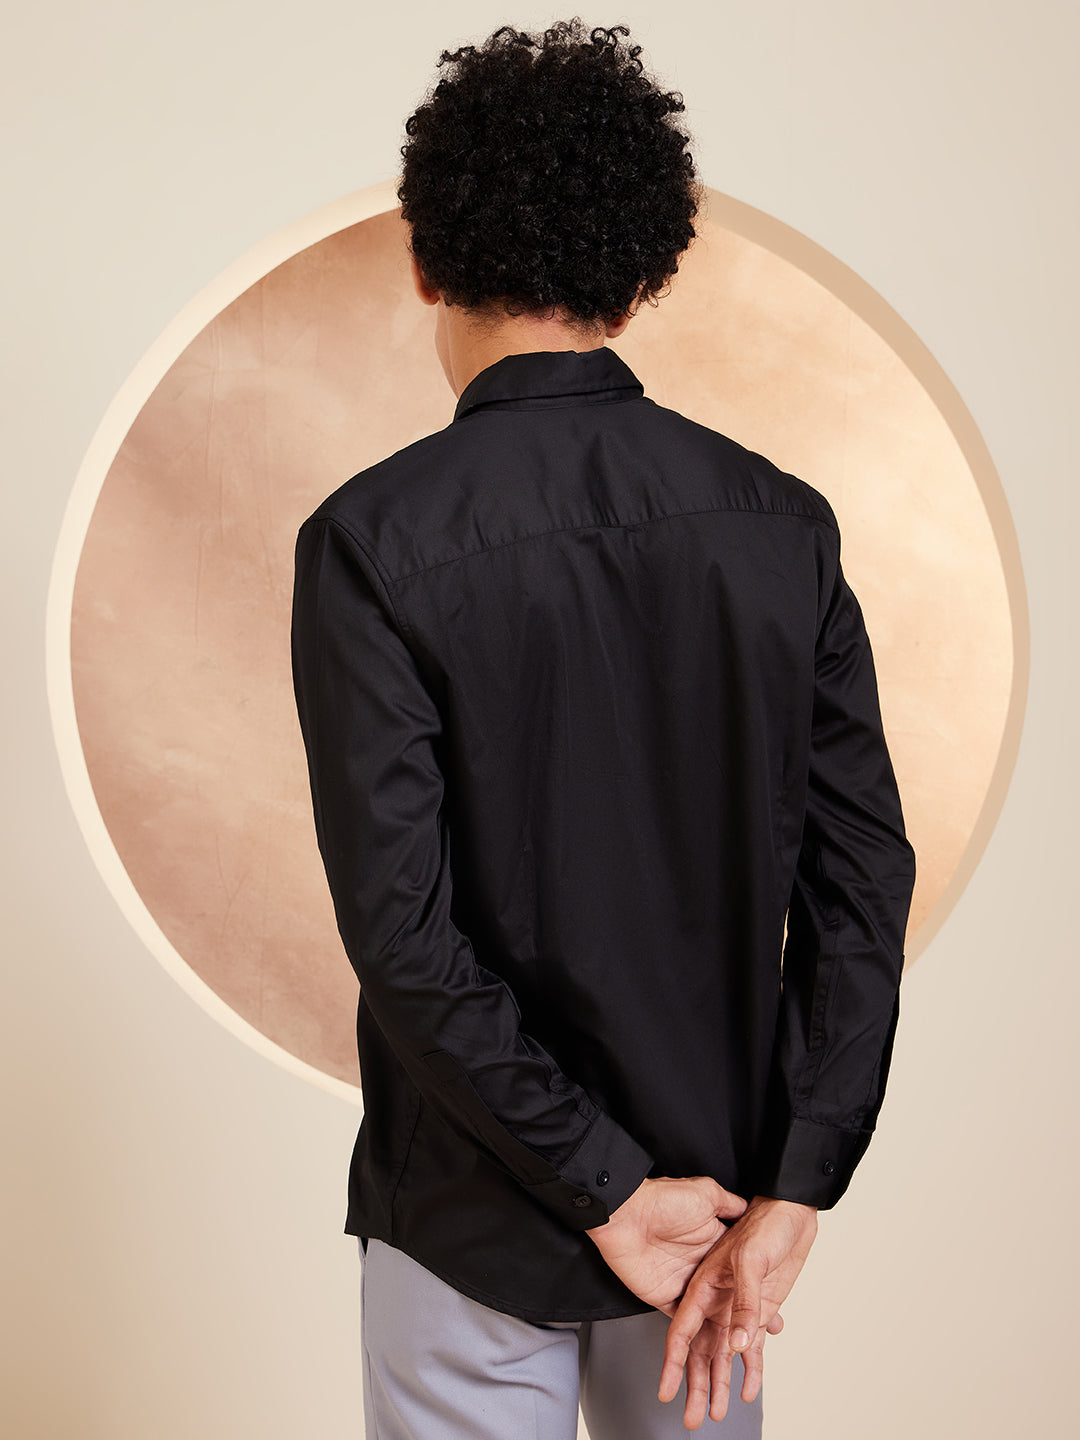 DENNISON Smart Self Design Embroidered Spread Collar Long Sleeve Cotton Shirt